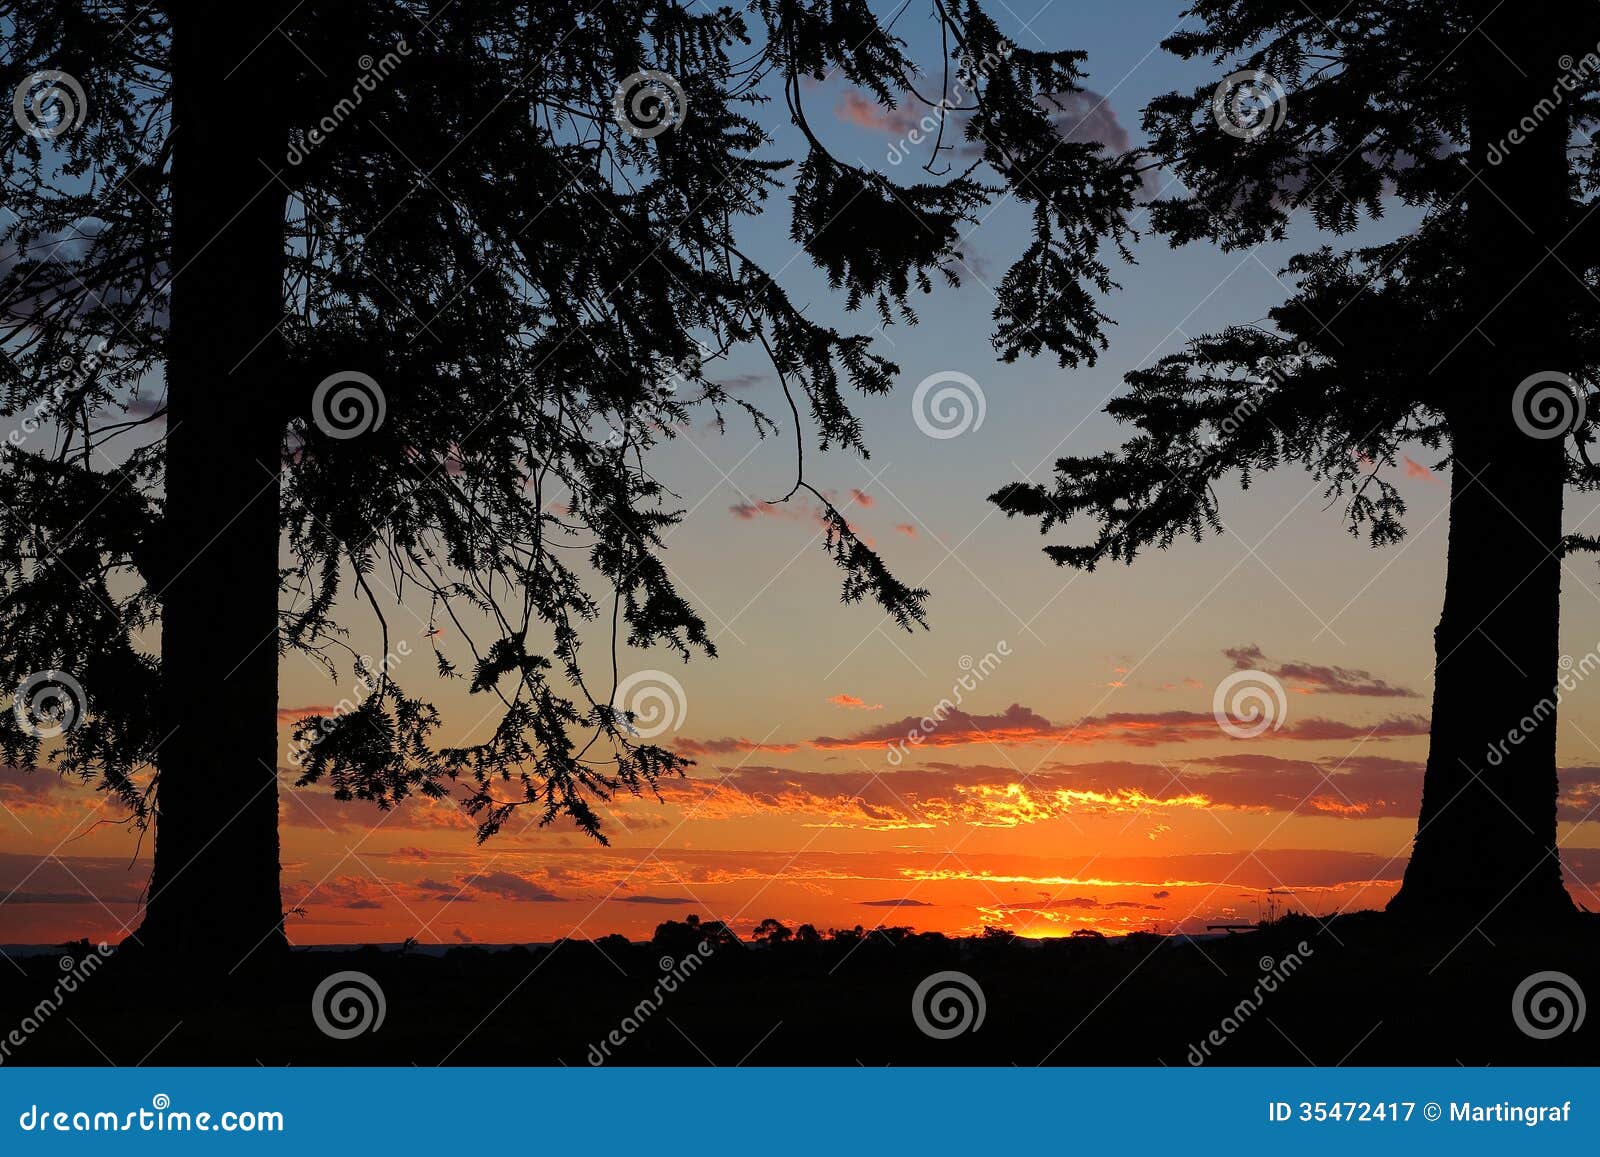 silhouetted pine trees frame orange sunset contre-jour, australian landscape